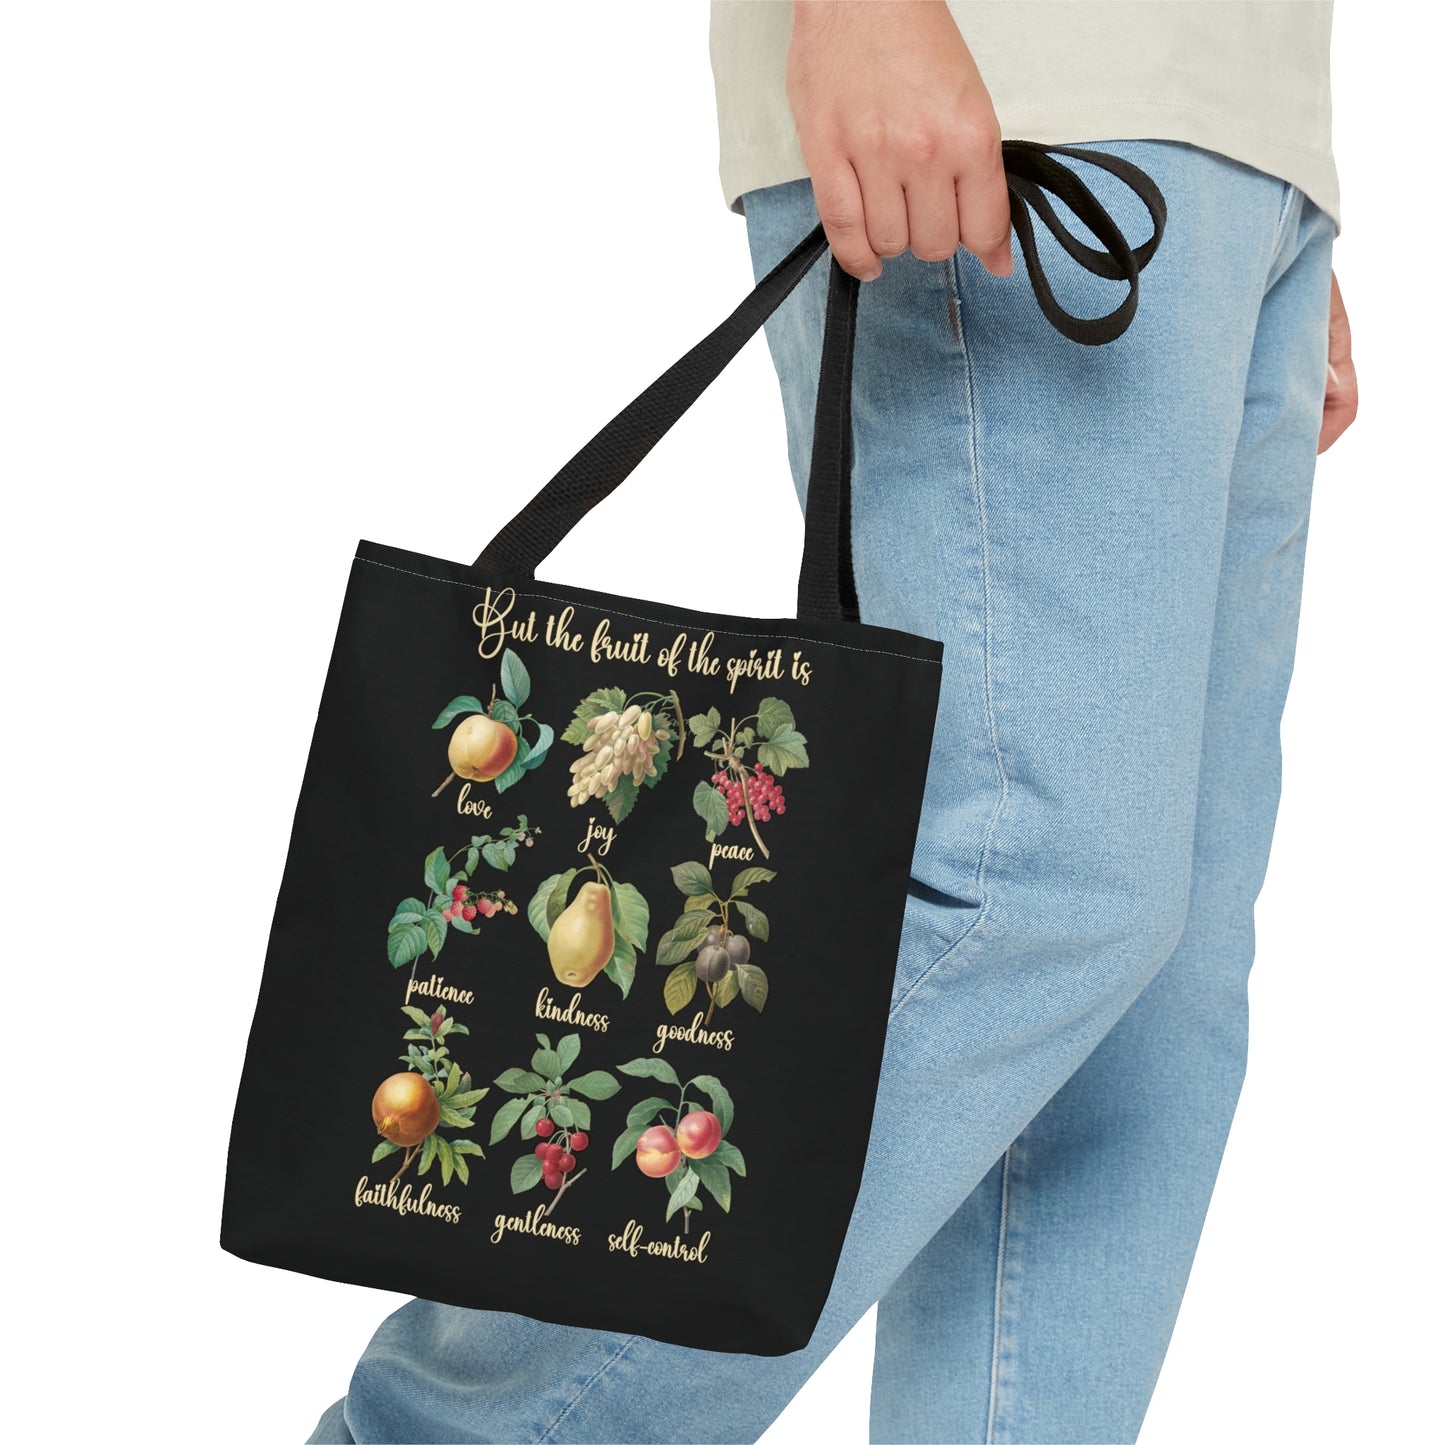 Fruit of the Spirit Tote Bag | Christian Tote Bag - Amazing Faith Designs